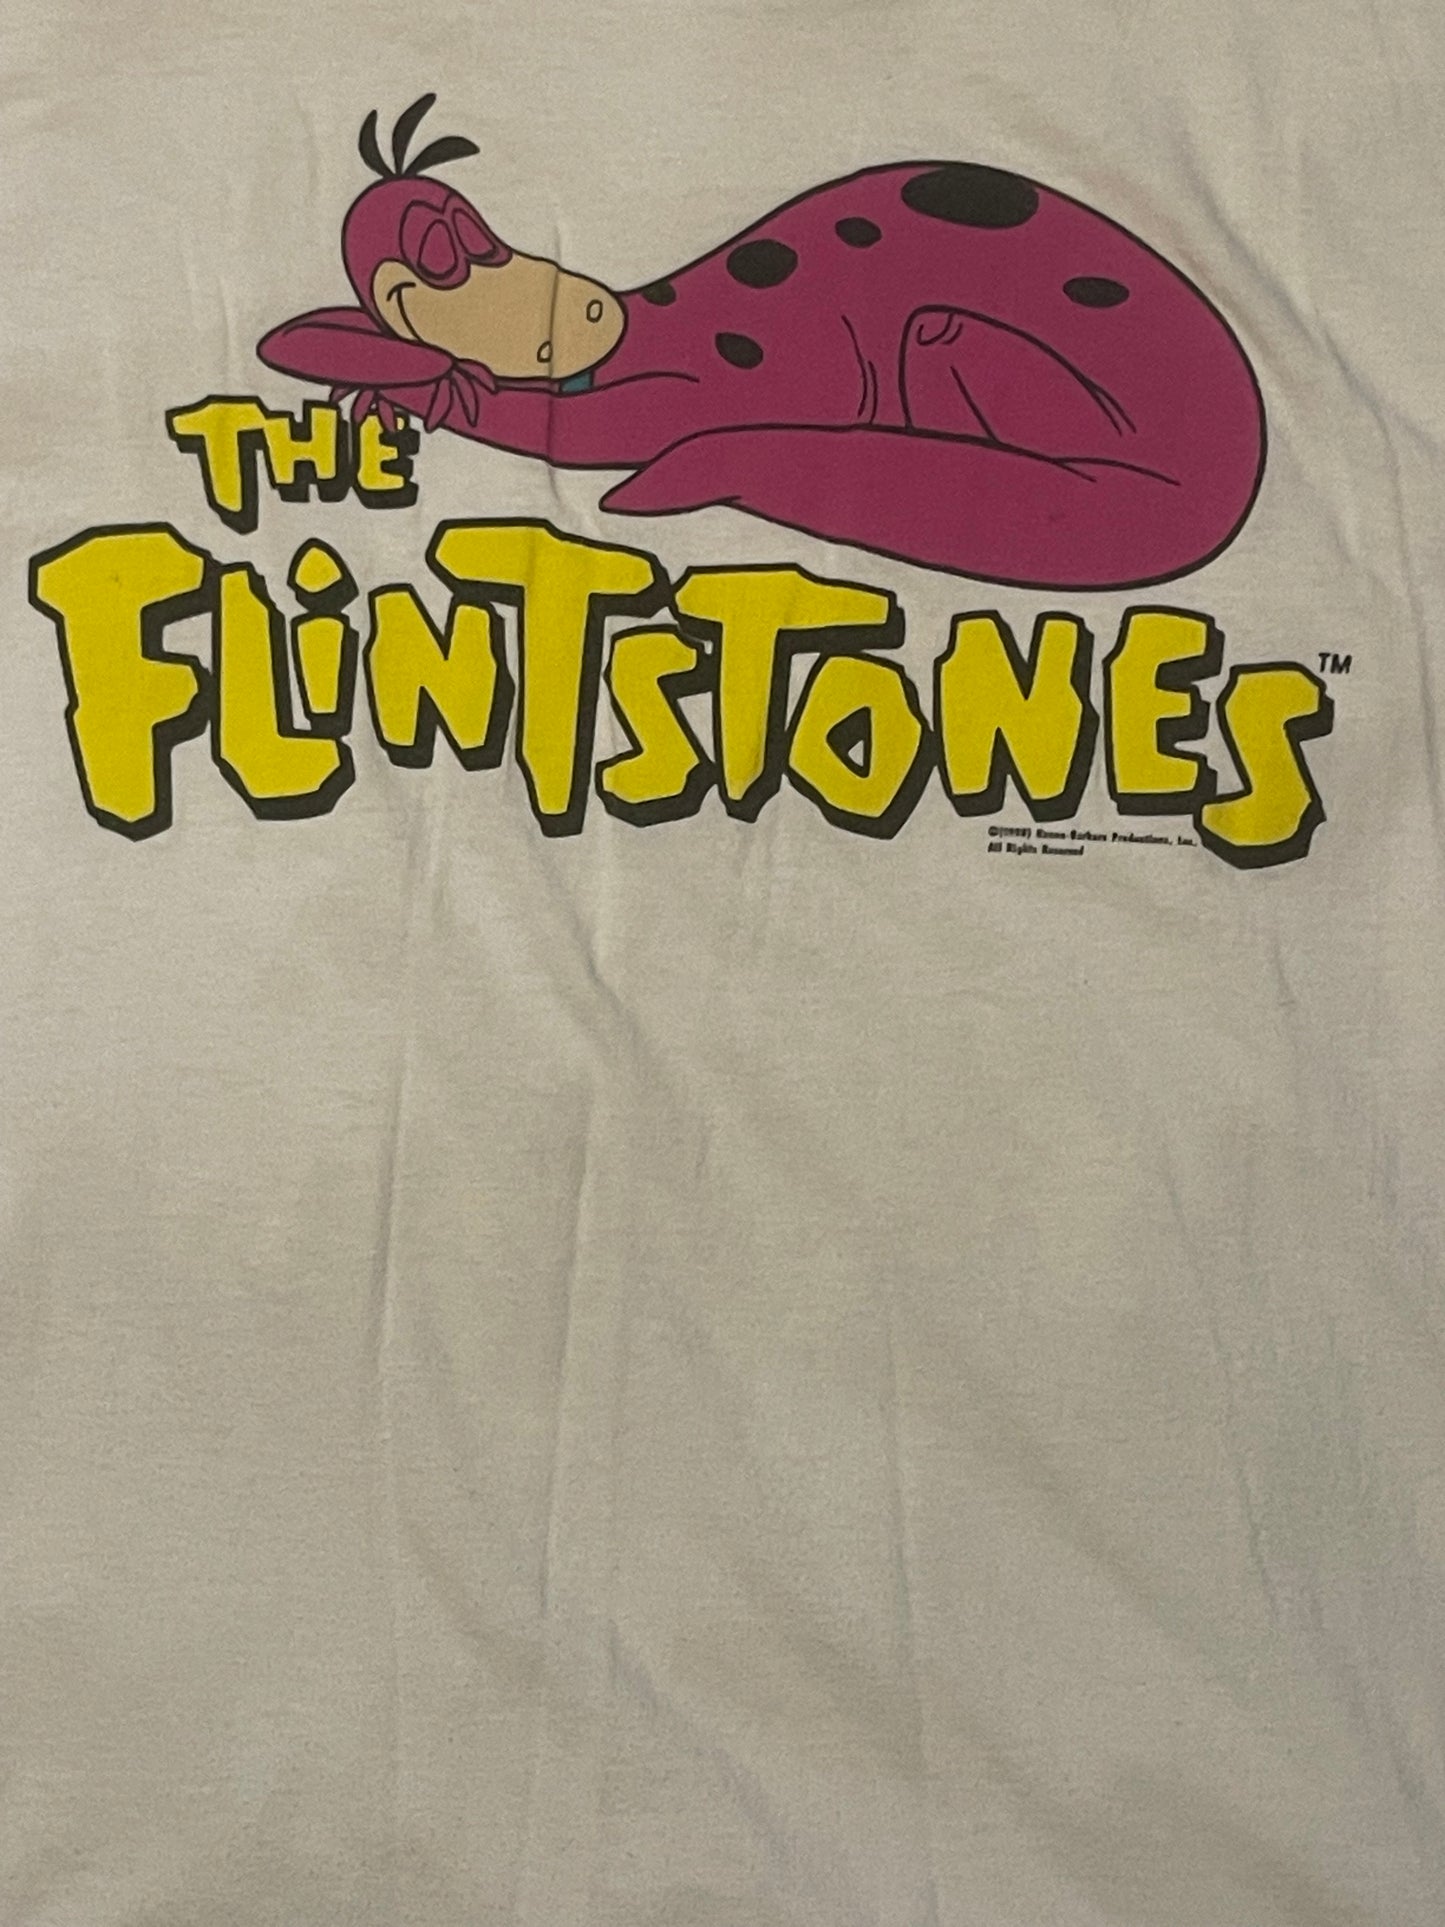 1998 The Flinstones Tee